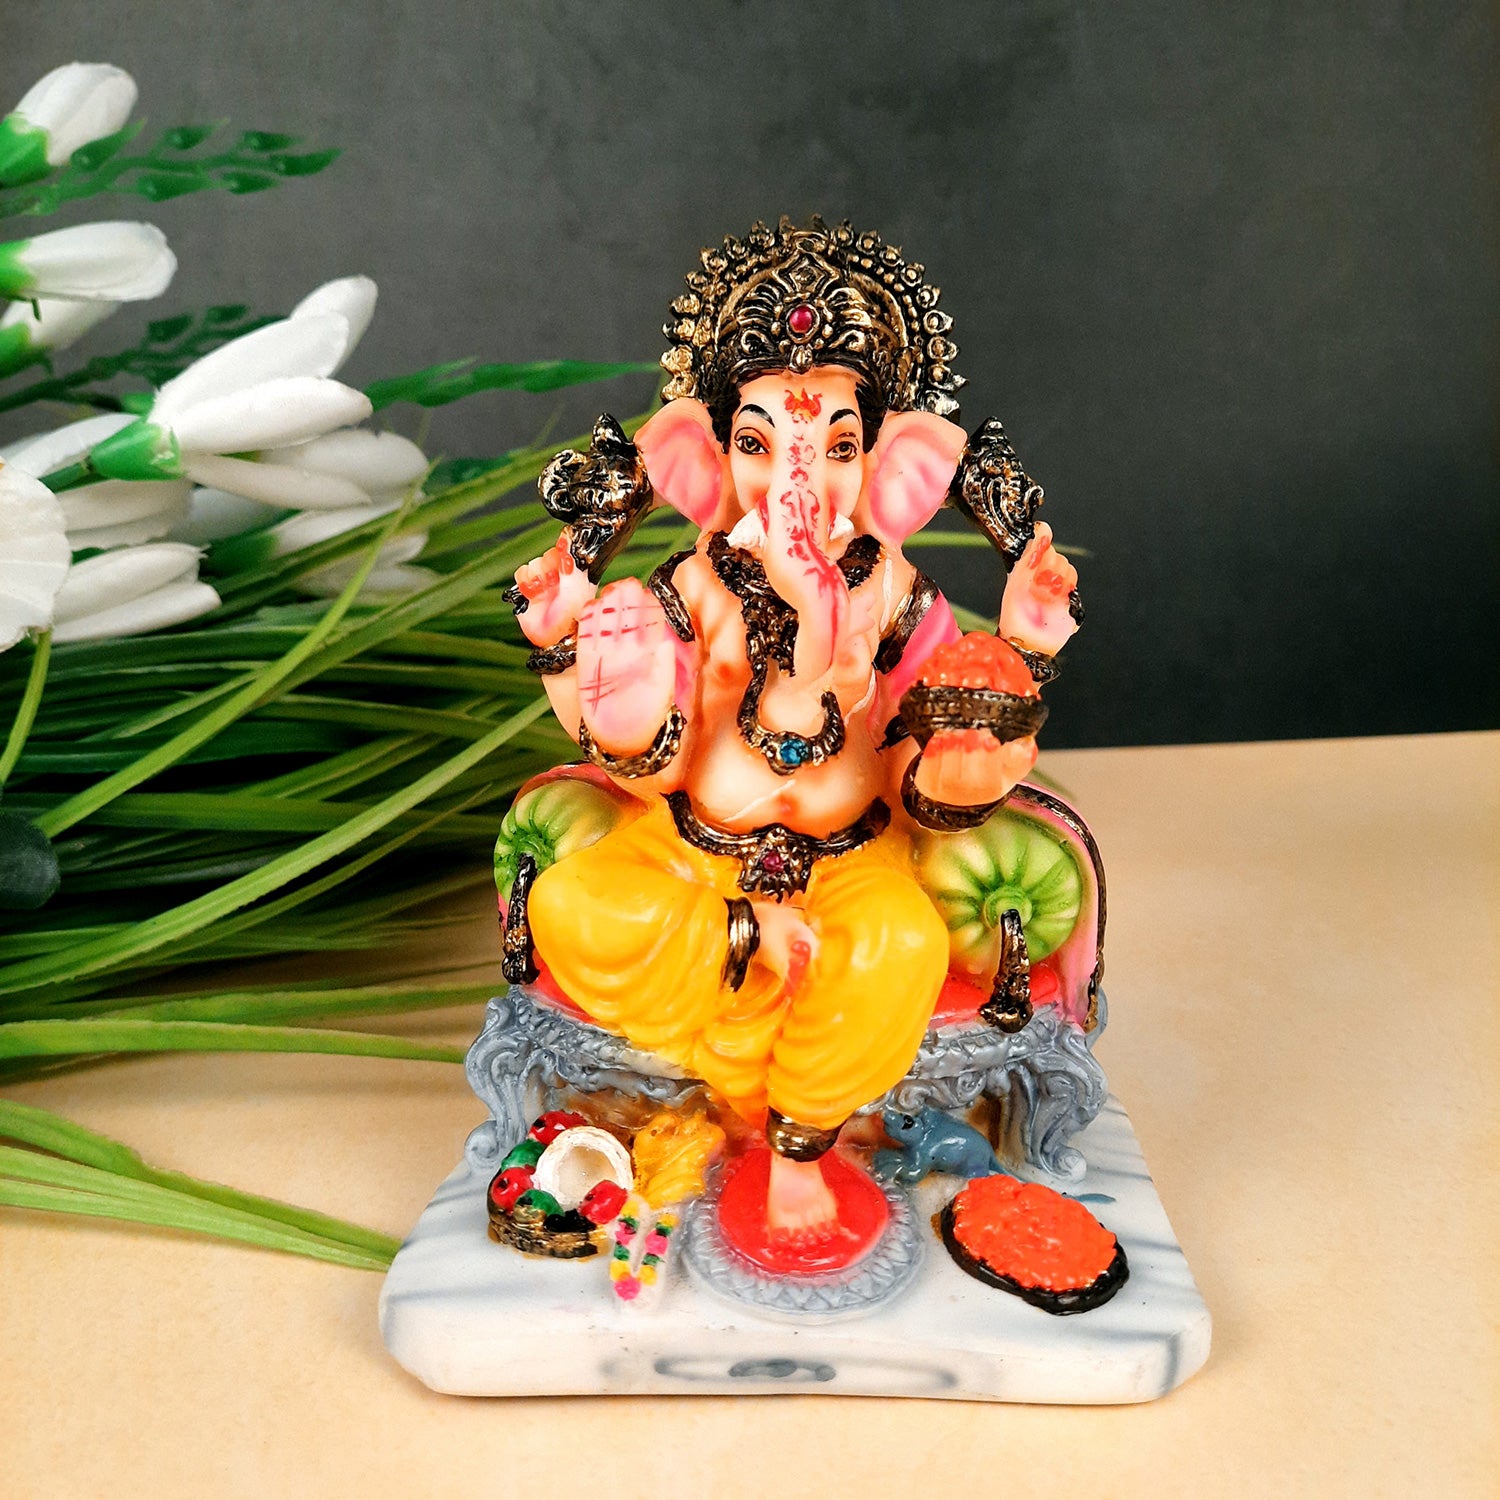 Ganesh Idol | Ganesha Statue - for Puja, Home & Table Decor | Housewarming, Diwali & Festival Gift - 6 Inch - apkamart